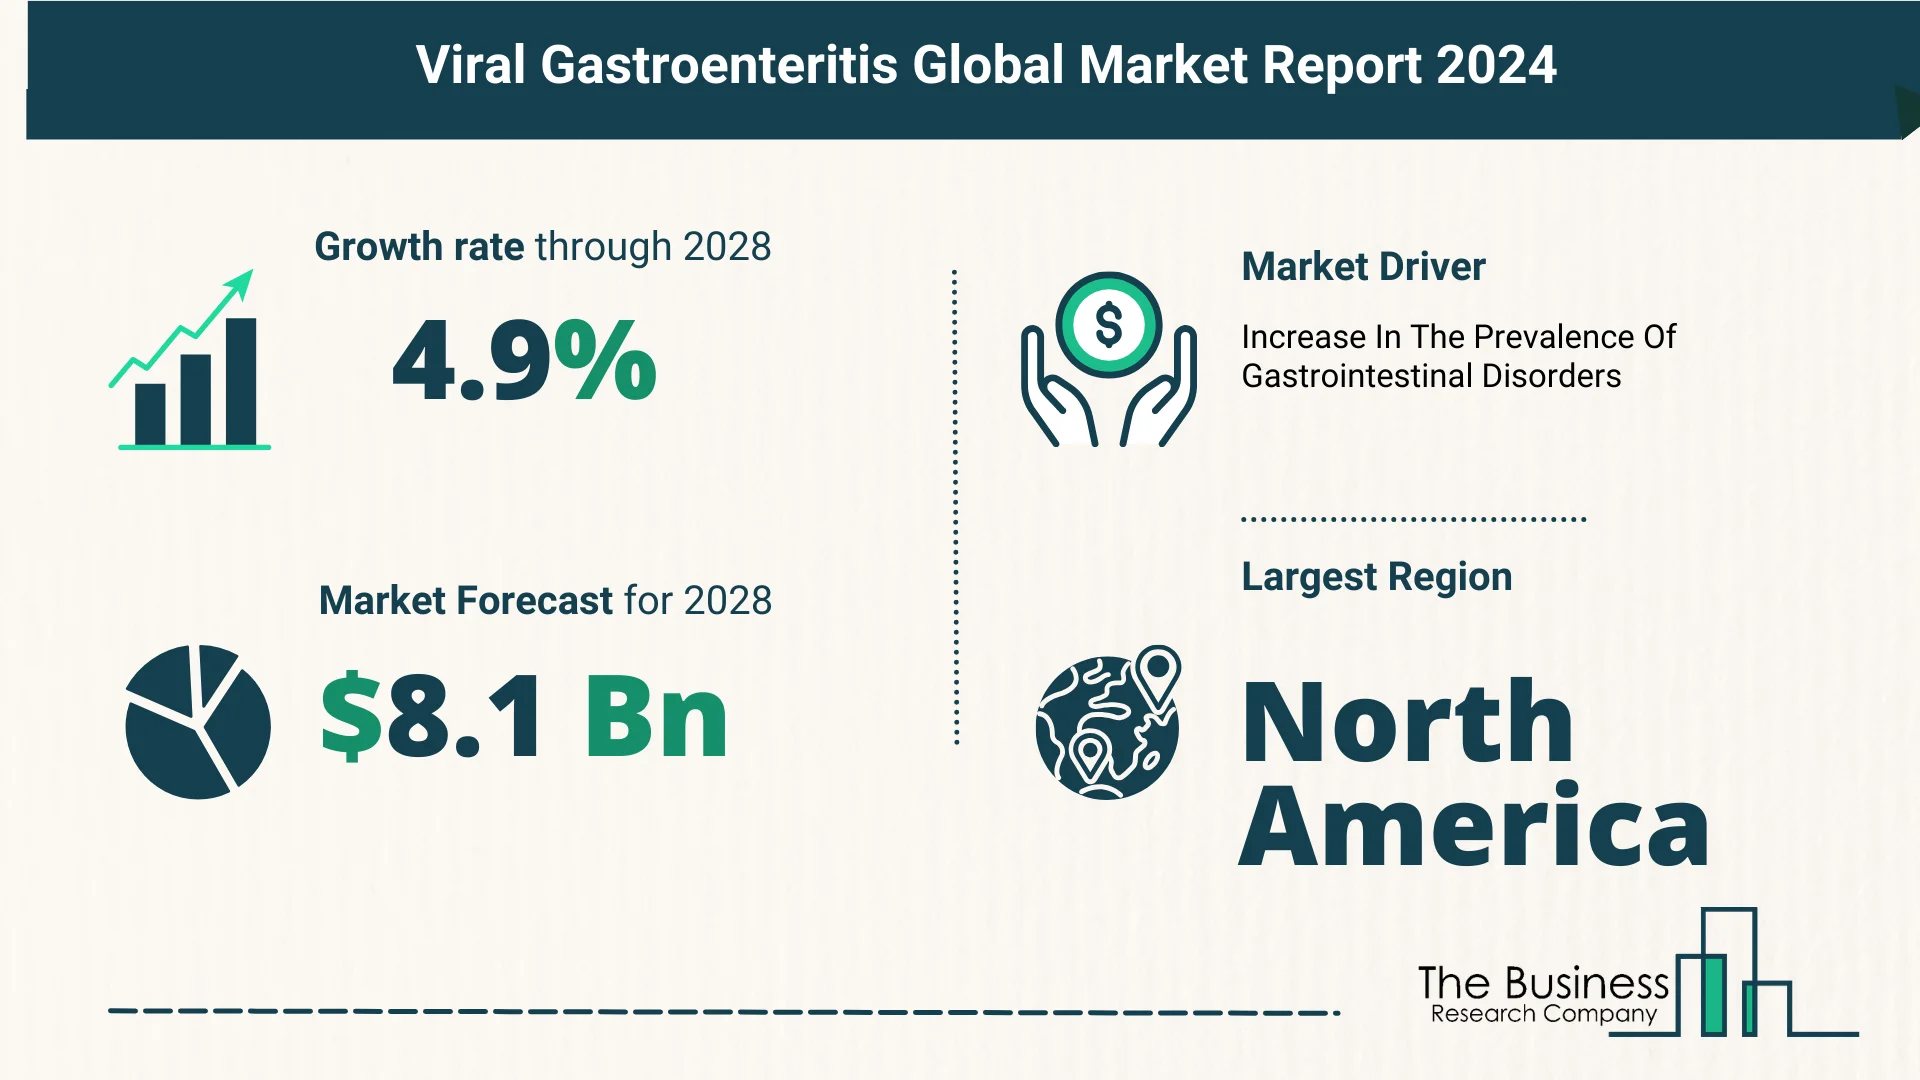 Global Viral Gastroenteritis Market